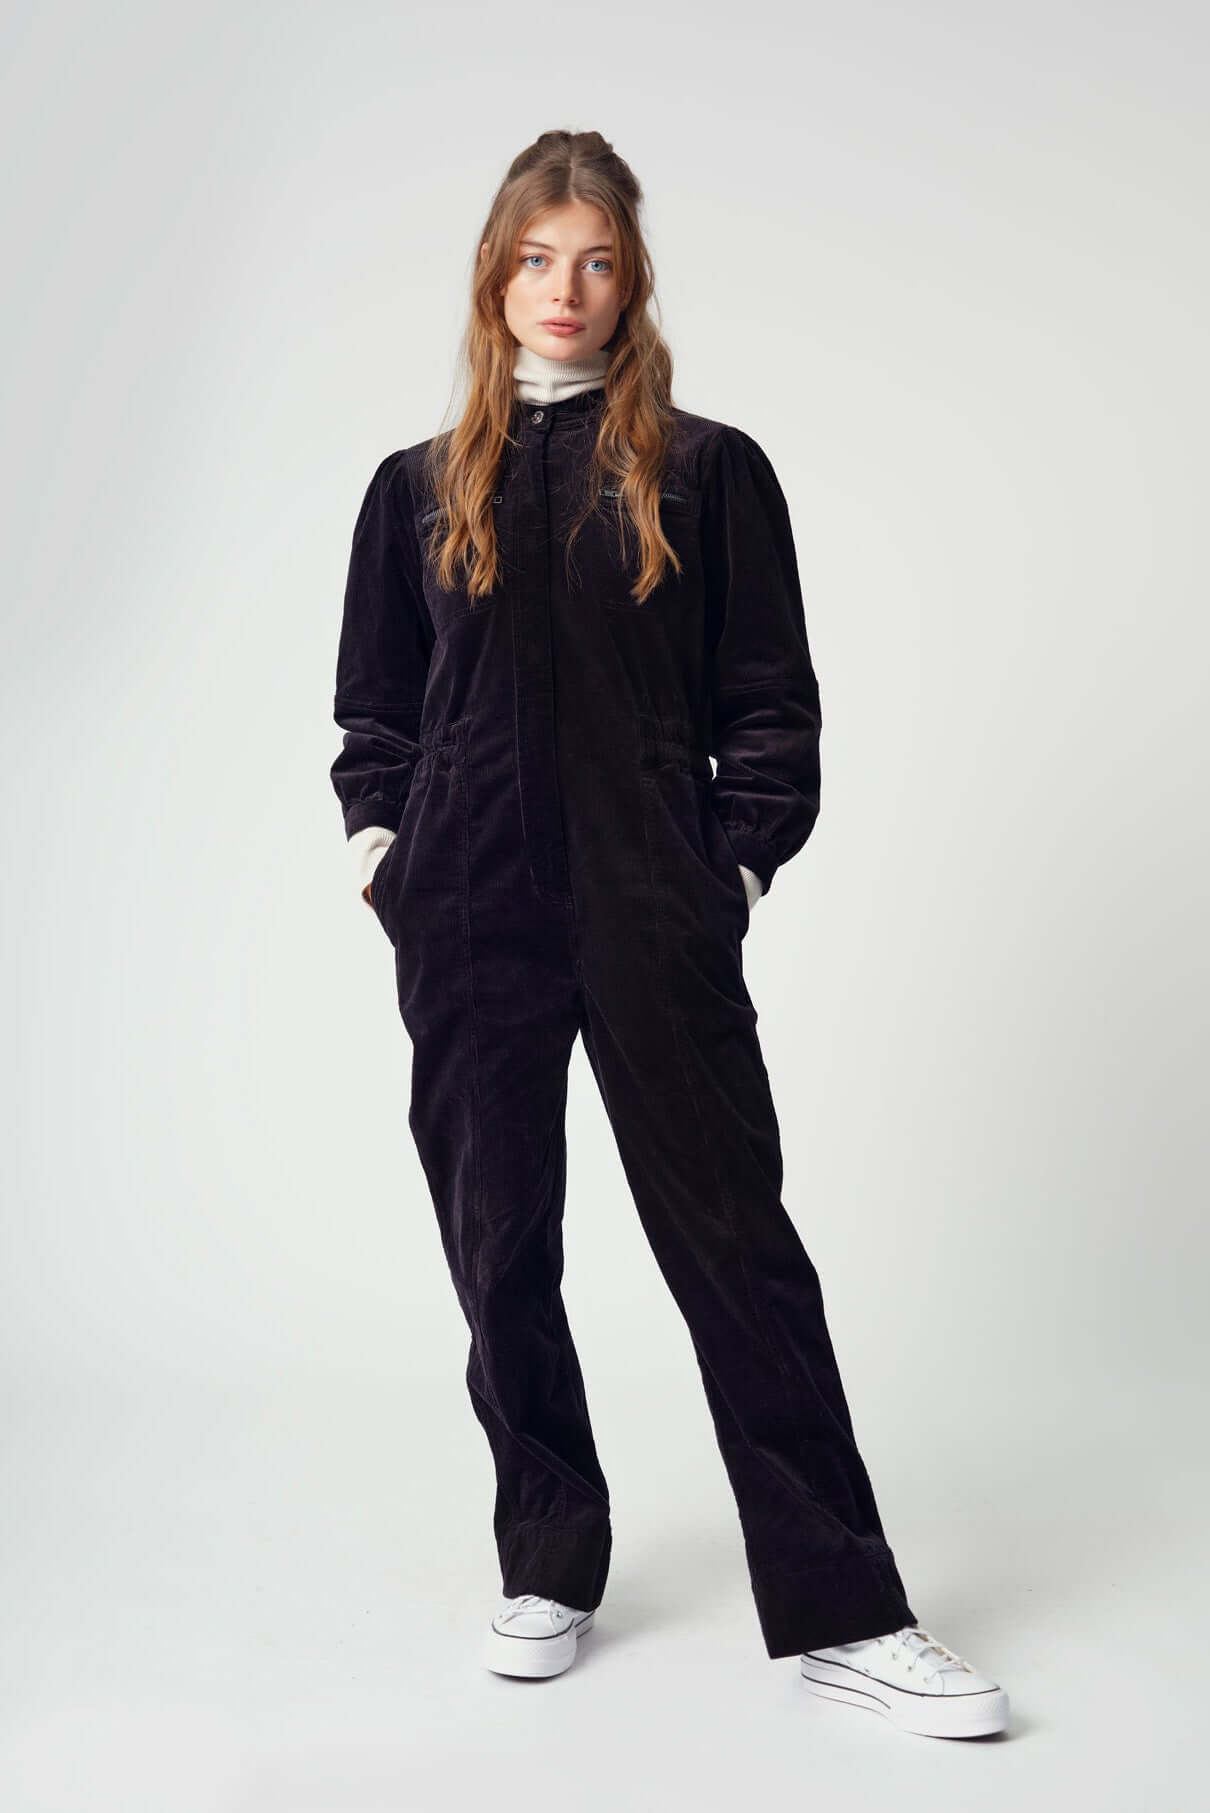 KAWA Womens Organic Cotton Jumpsuit Black, Size 2 / UK 10 / EUR 38